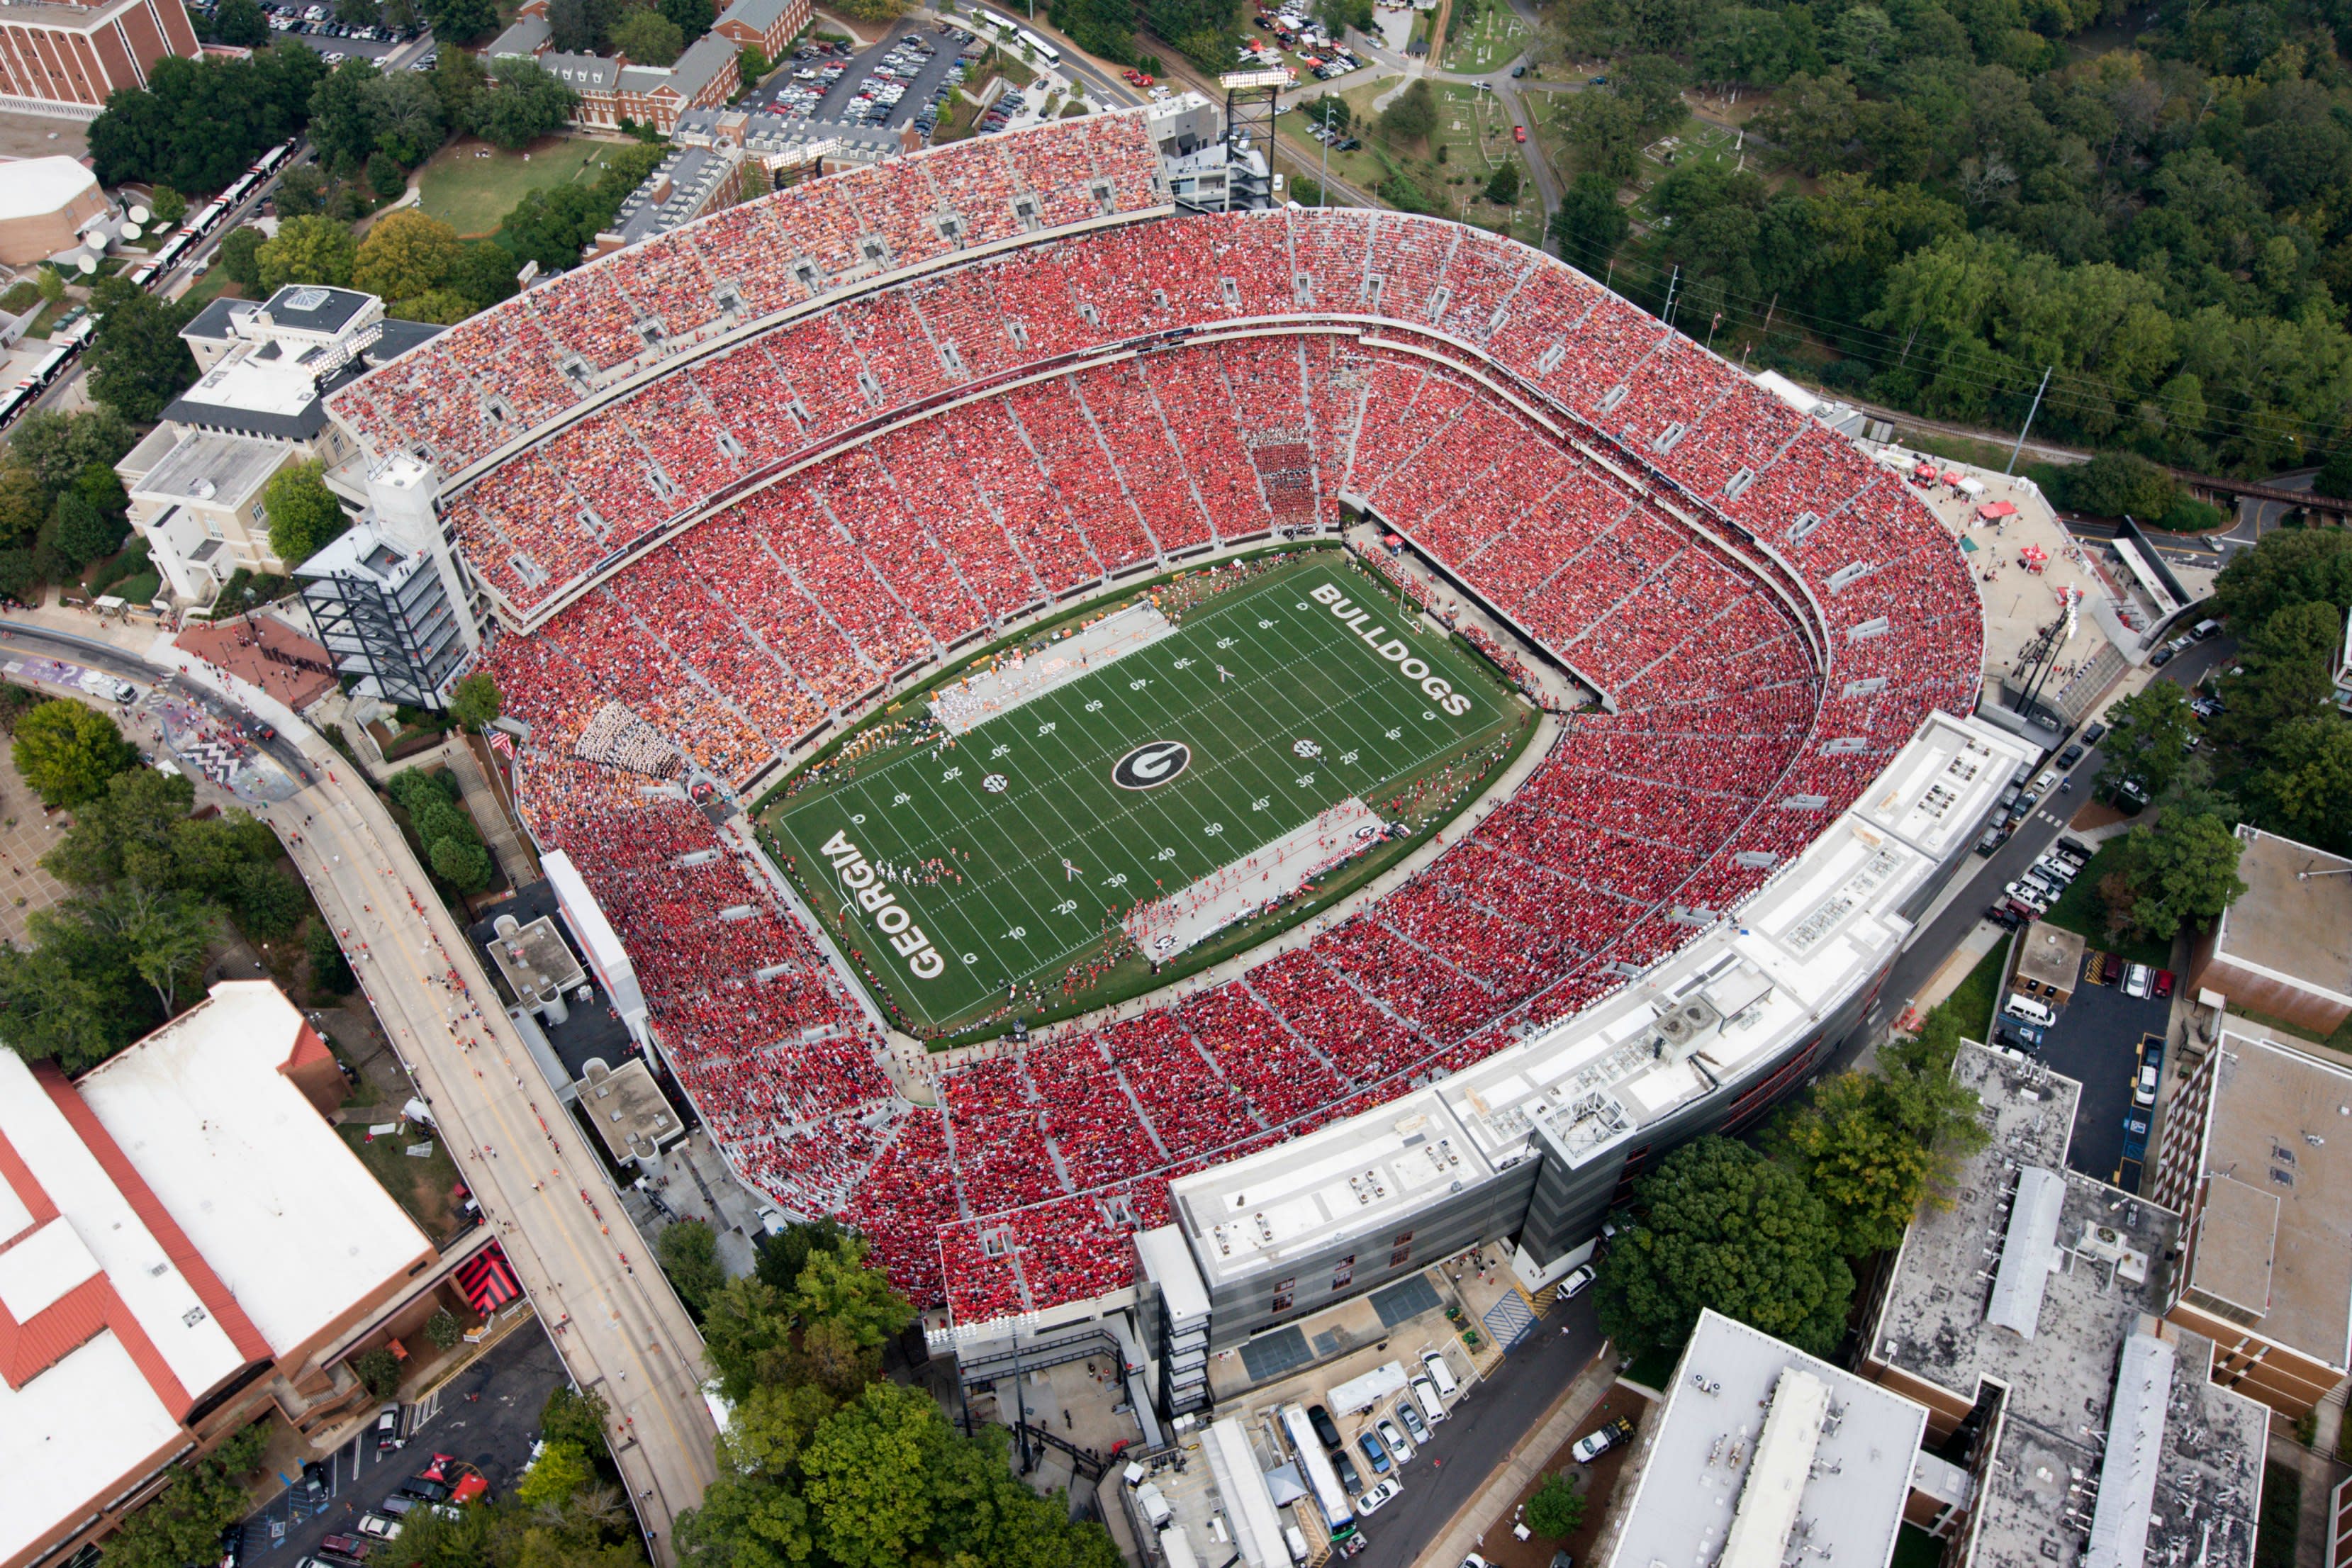 Aerial view of UGA's Sanford Stadium in Athens, Georgia